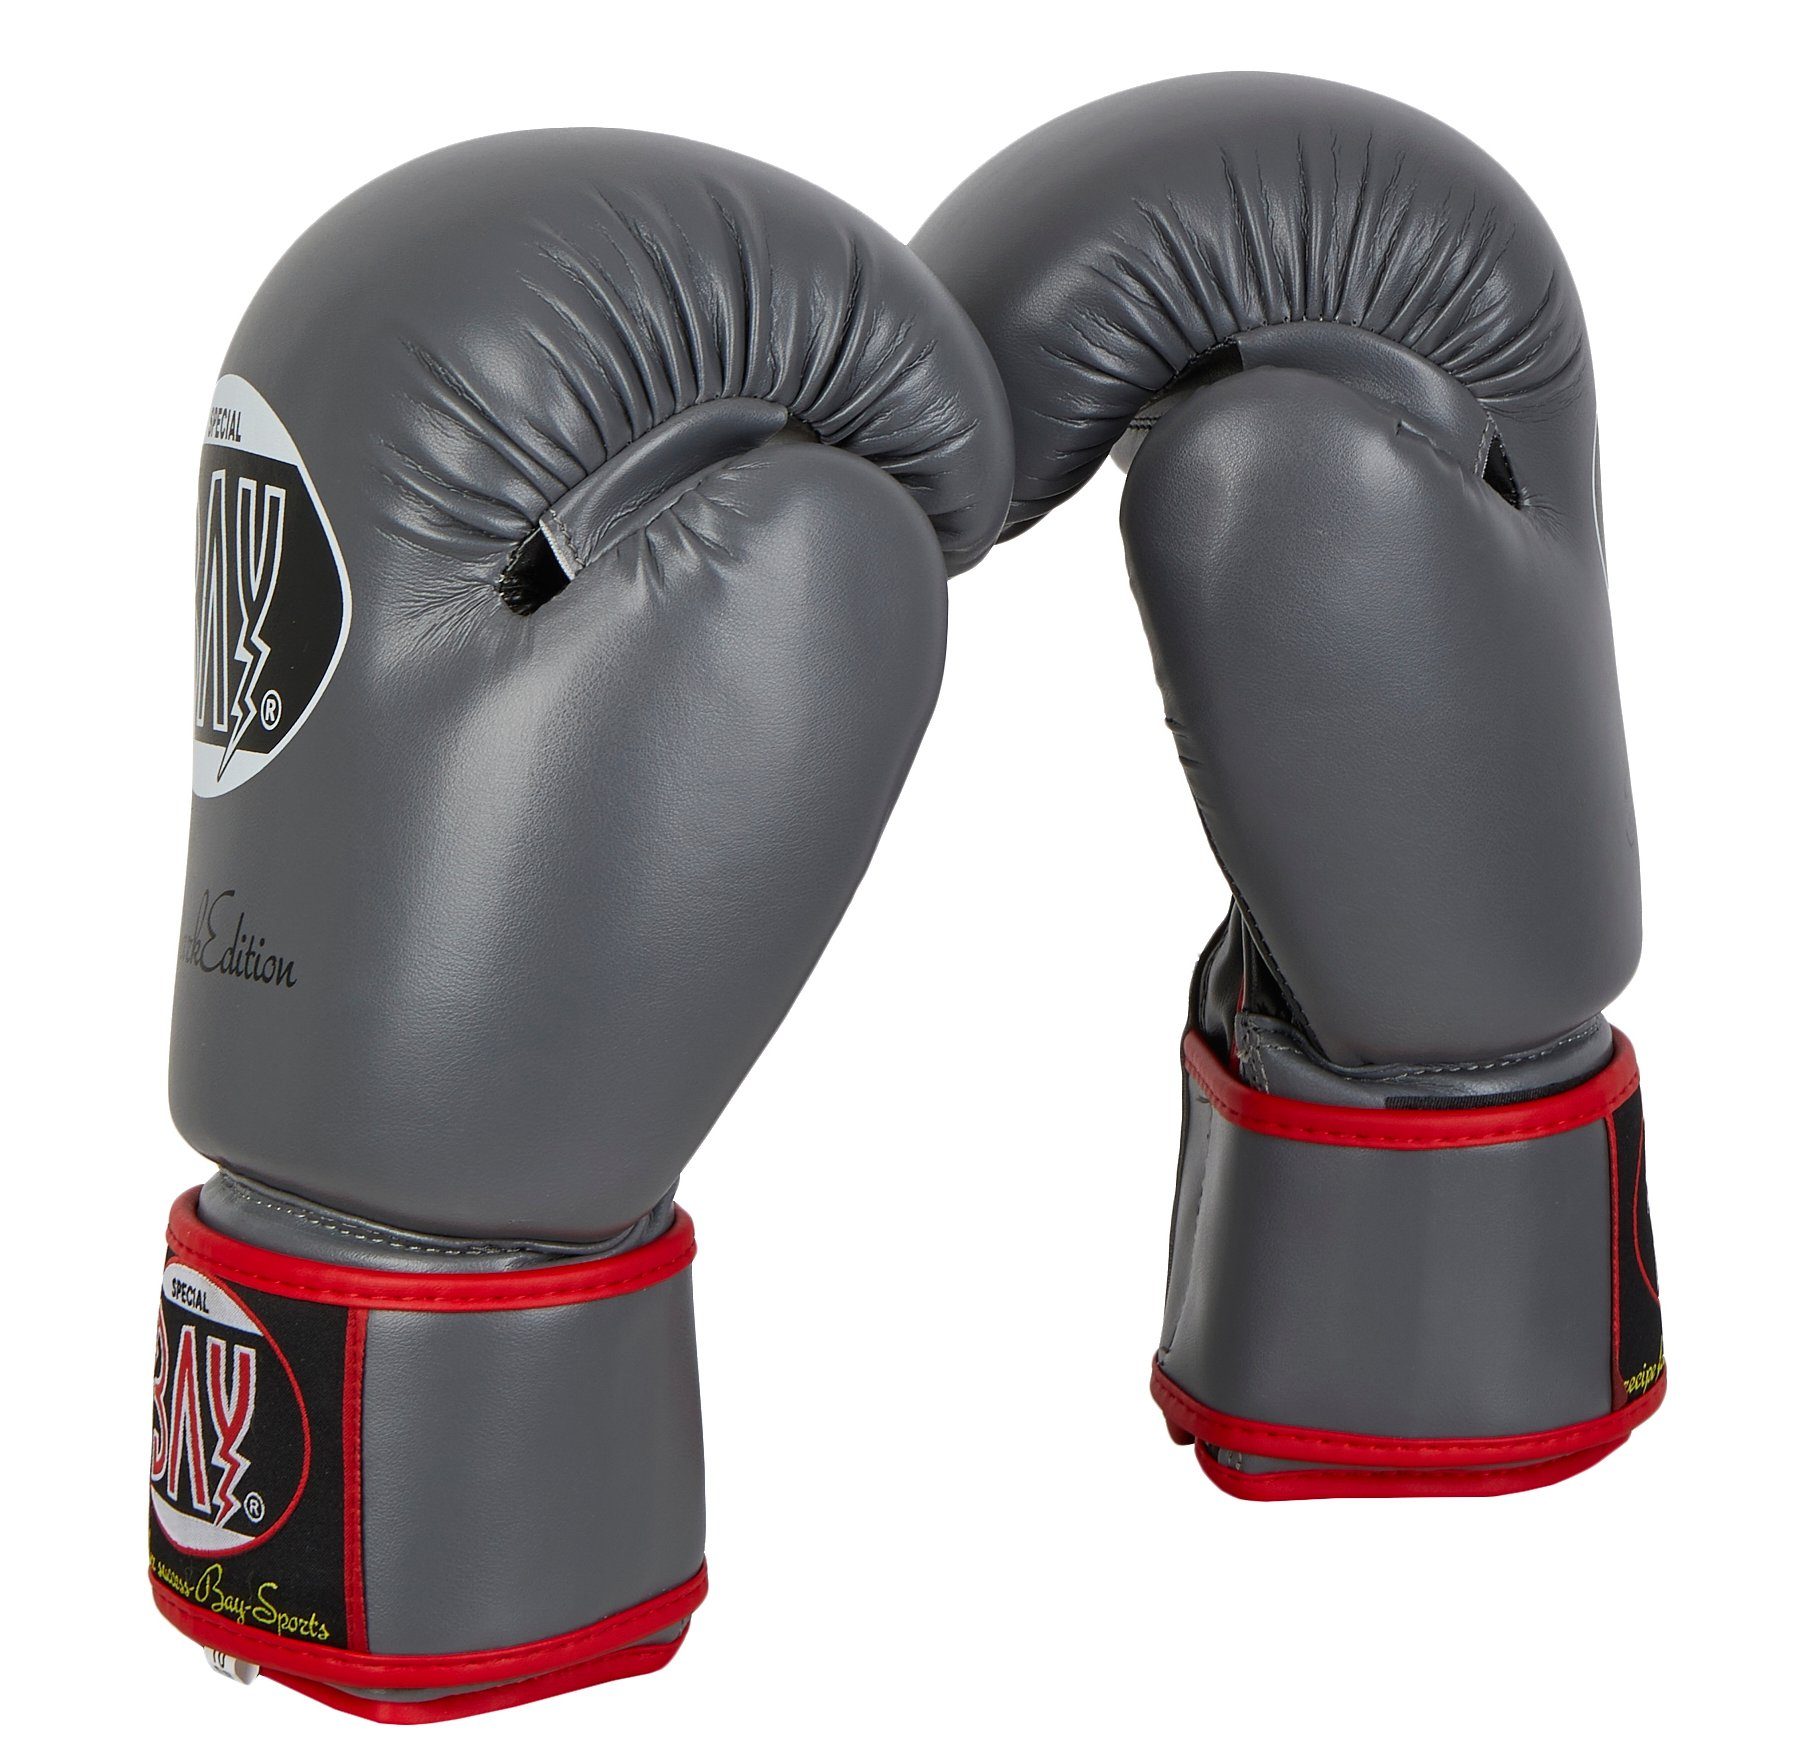 BAY-Sports Future Boxen Box-Handschuhe Boxhandschuhe dunkelgrau Kickboxen